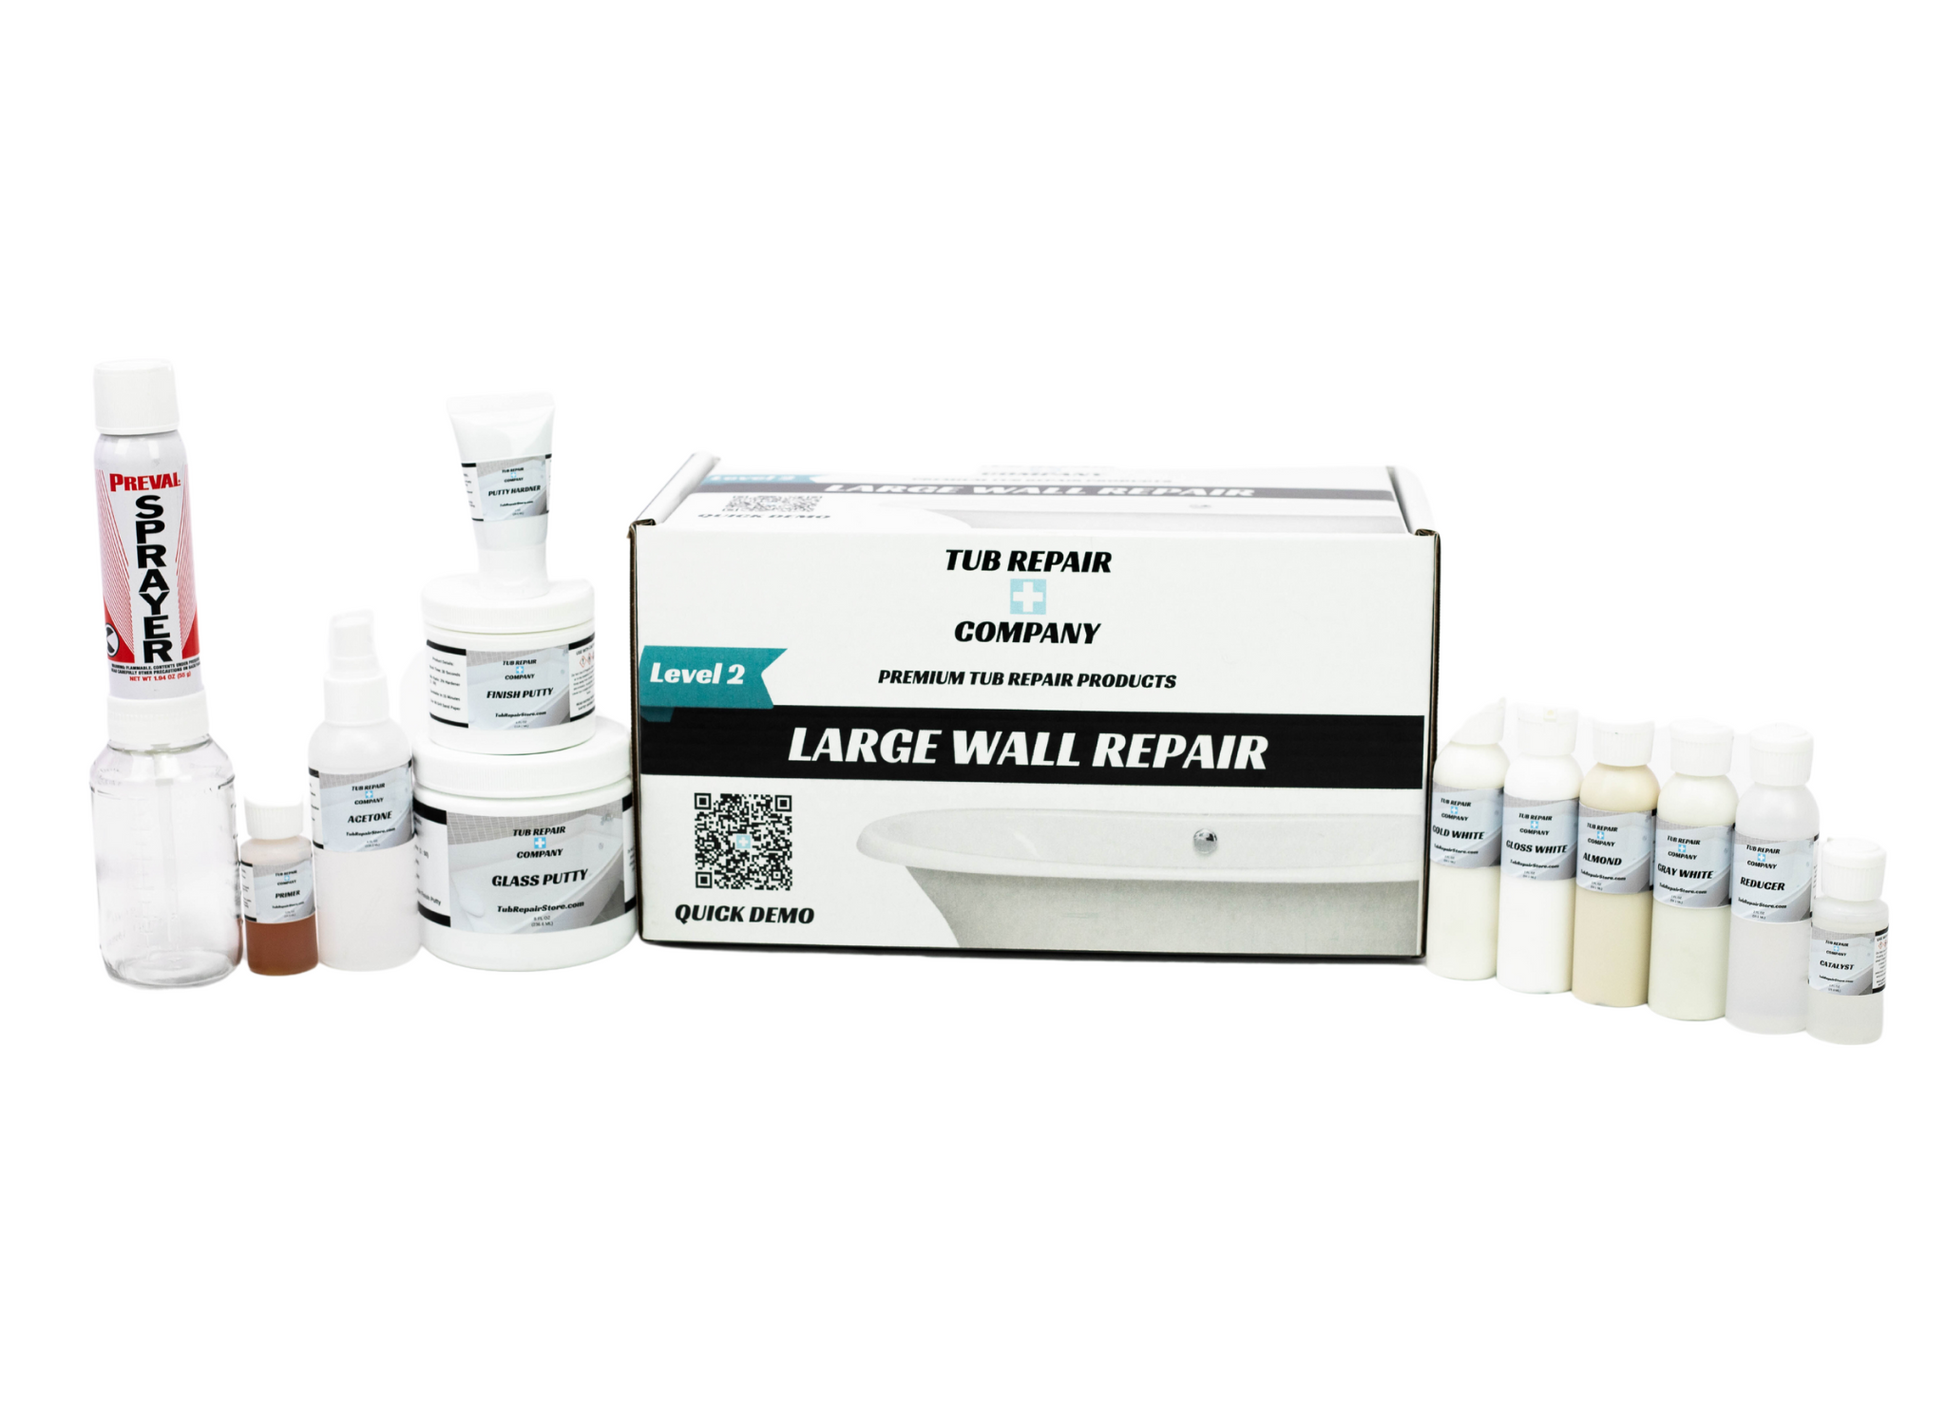 Hinrichs Wall Repair Cream 250 g - Wall Repair Kit comprising 2x